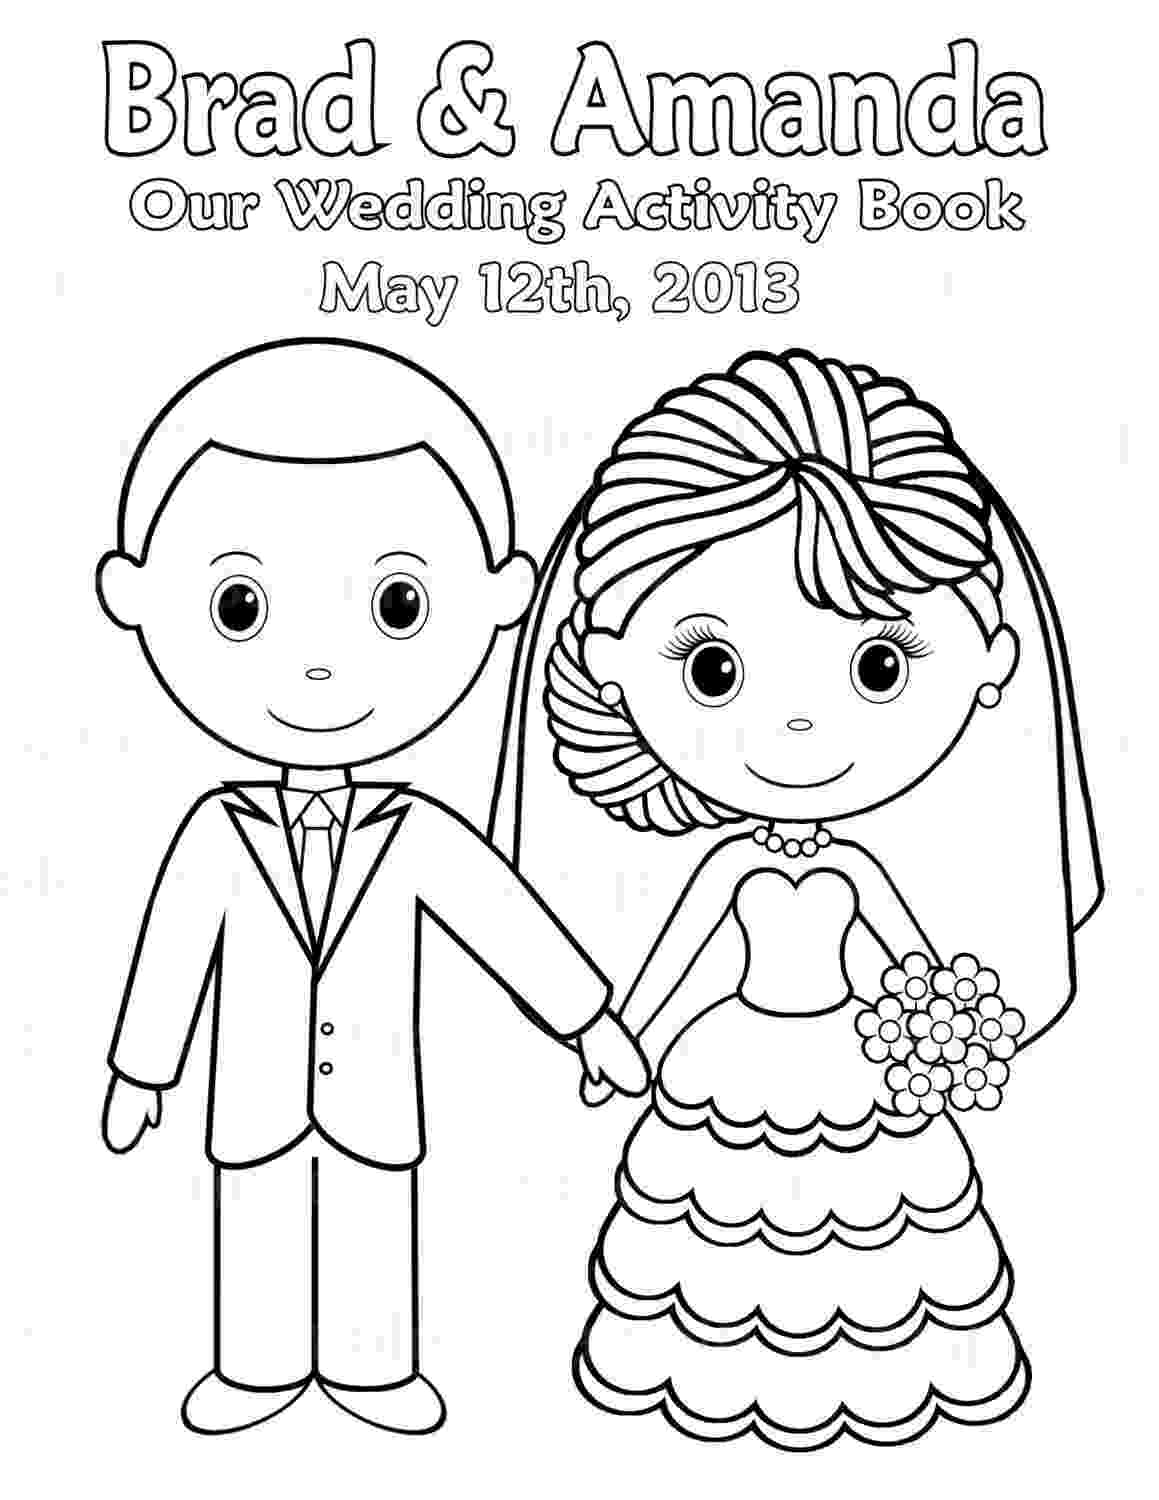 printable coloring sheets wedding wedding coloring pages best coloring pages for kids printable wedding coloring sheets 